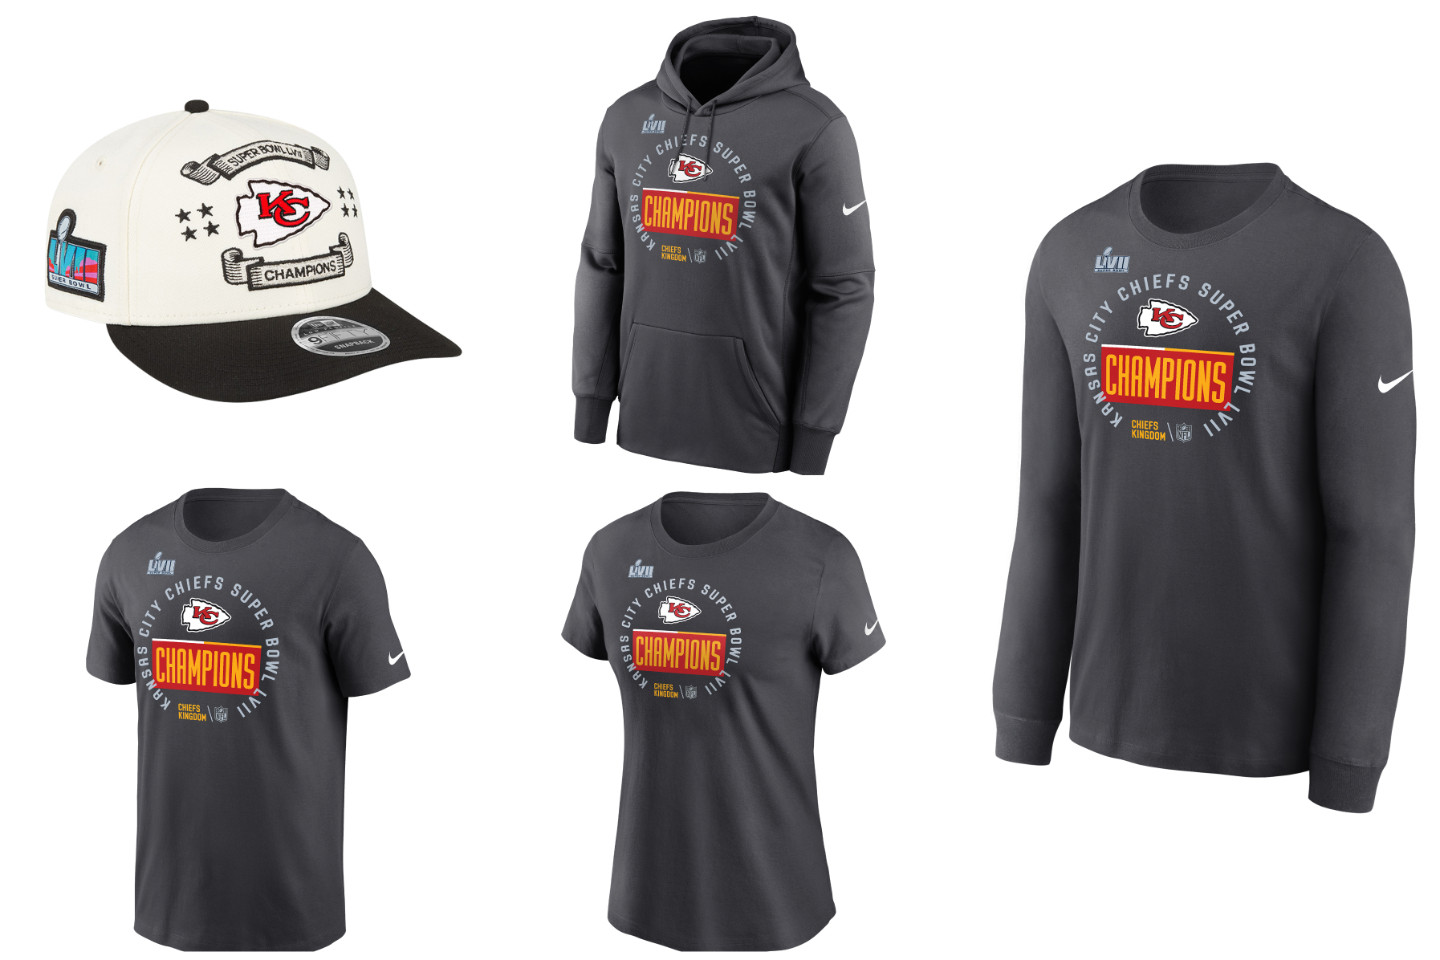 Eagles Super Bowl Gear: Super Bowl LVII hats, hoodies, shirts and more